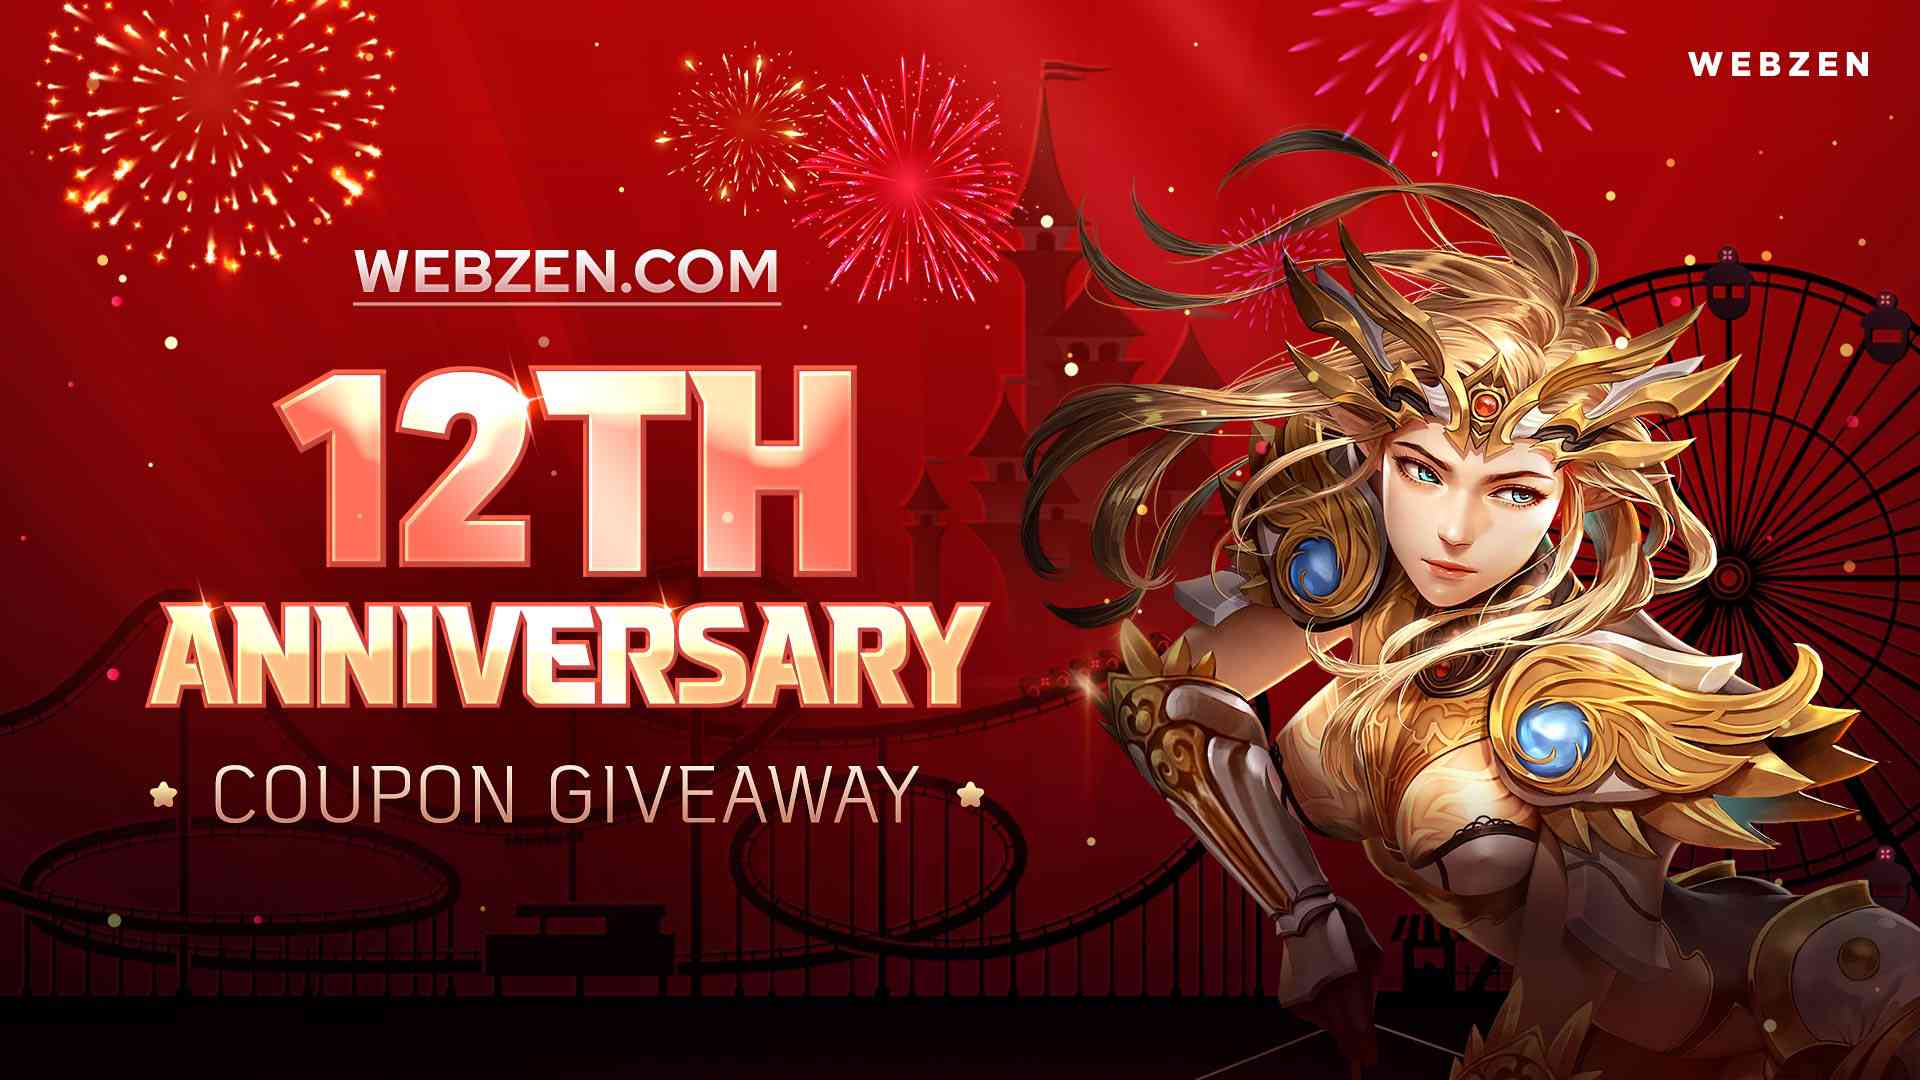 WEBZEN.COM’s 12th Anniversary Giveaway 16